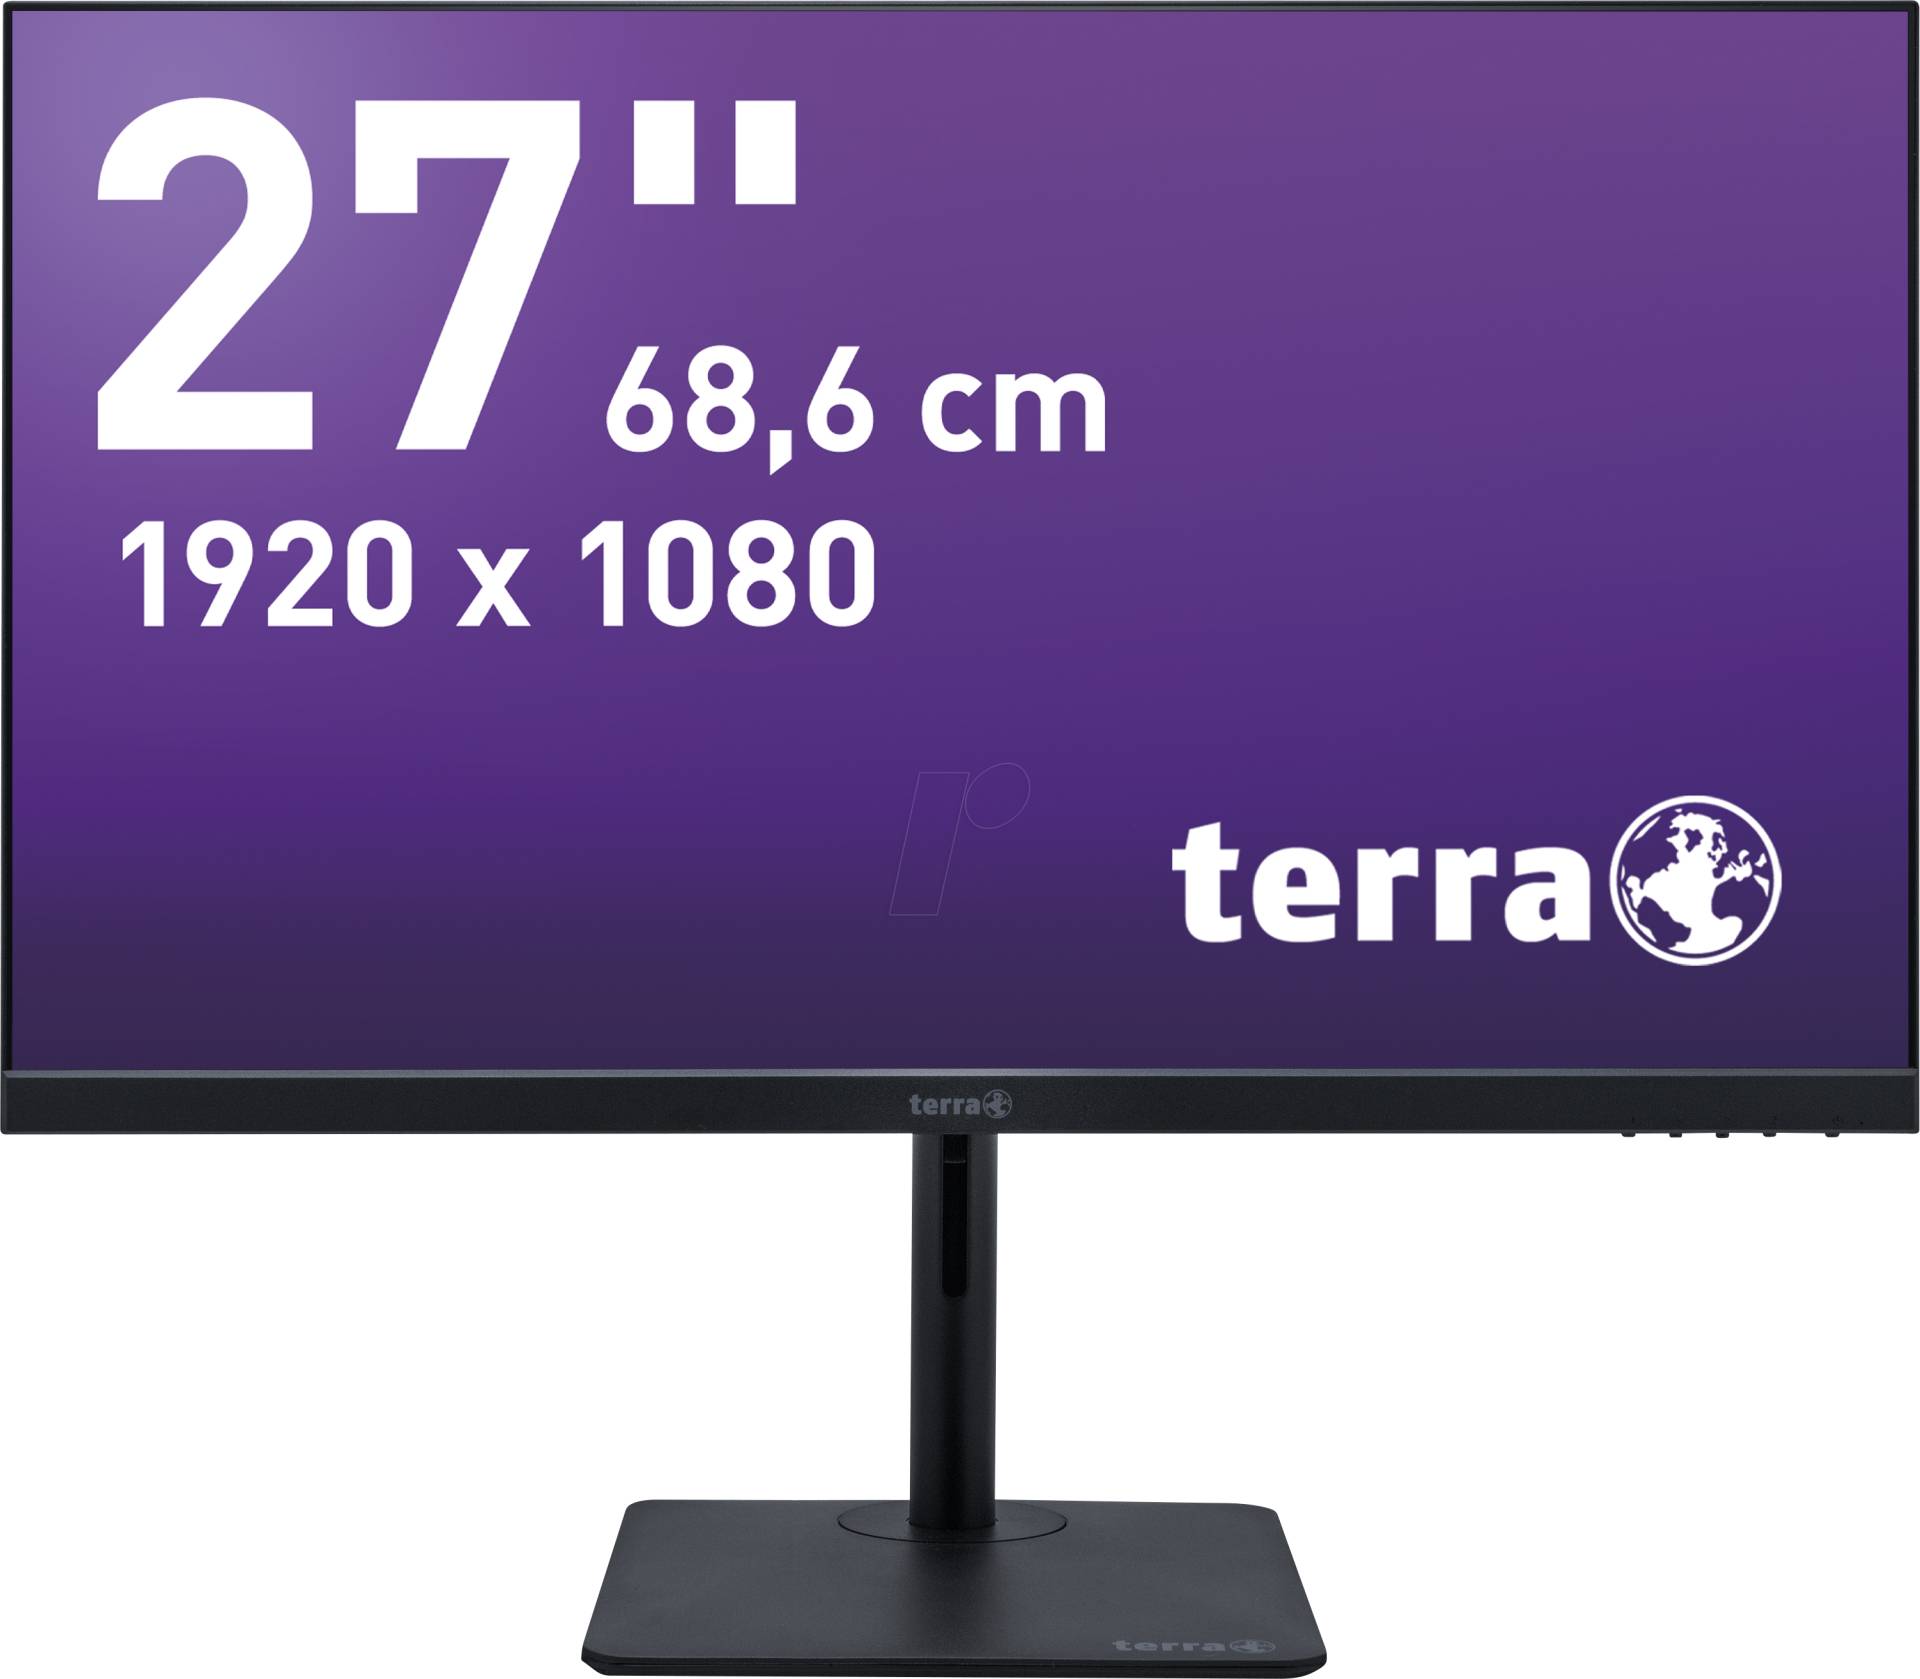 TERRA 3030230 - 69cm Monitor, 1080p, USB-C, Lautsprecher von TERRA